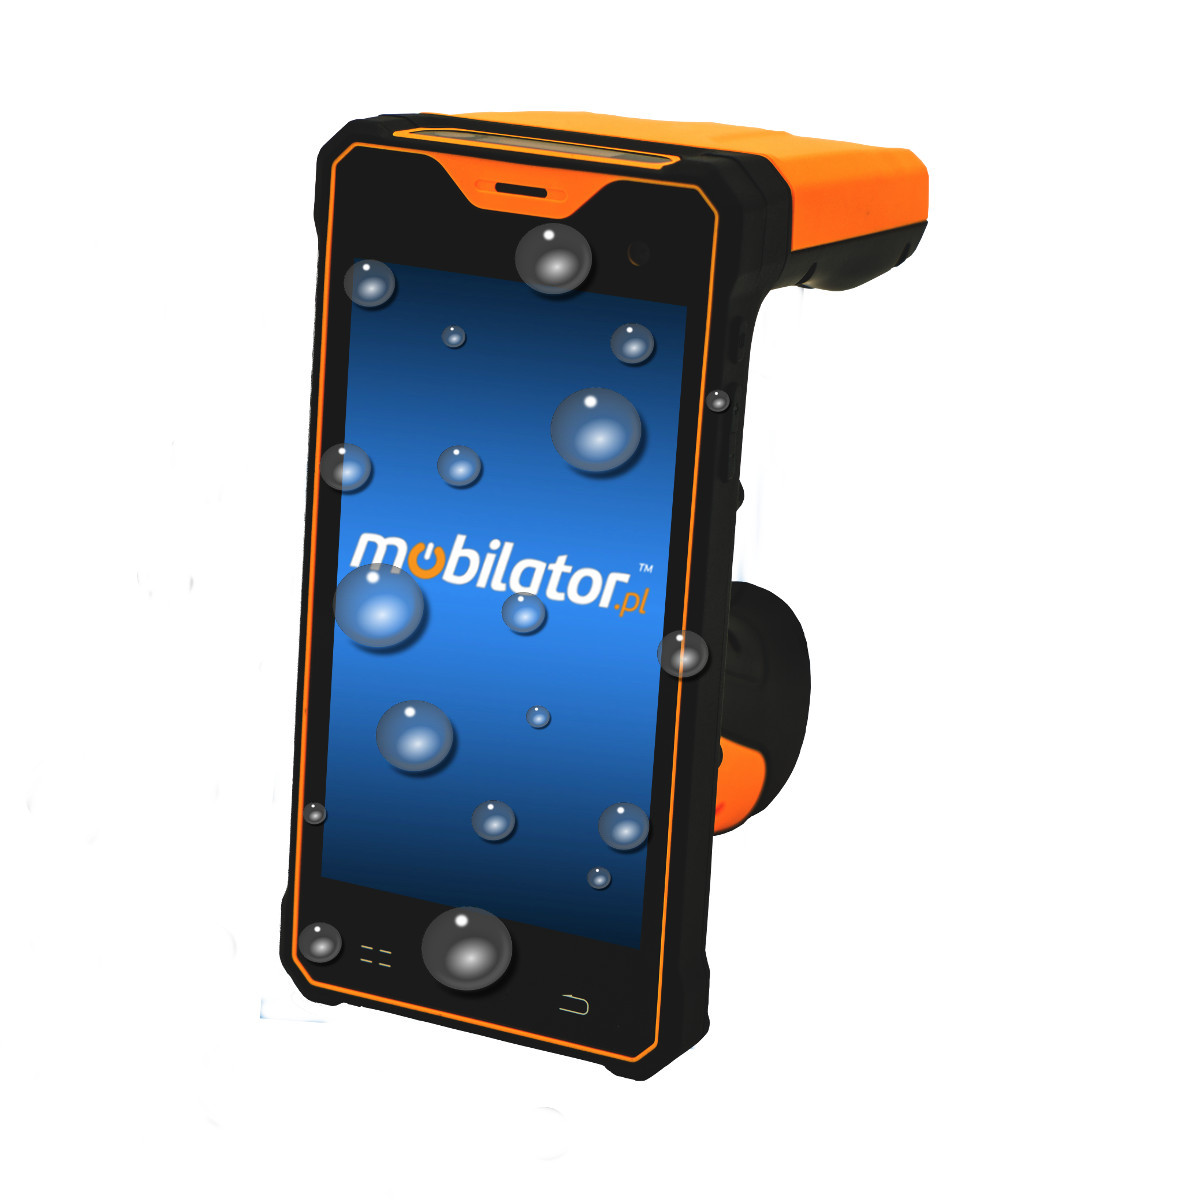 waterproof shock-resistant industrial resilient smartphone NFC 4G military IP65 MIL-STD 810G barcode scanner 1D 2D